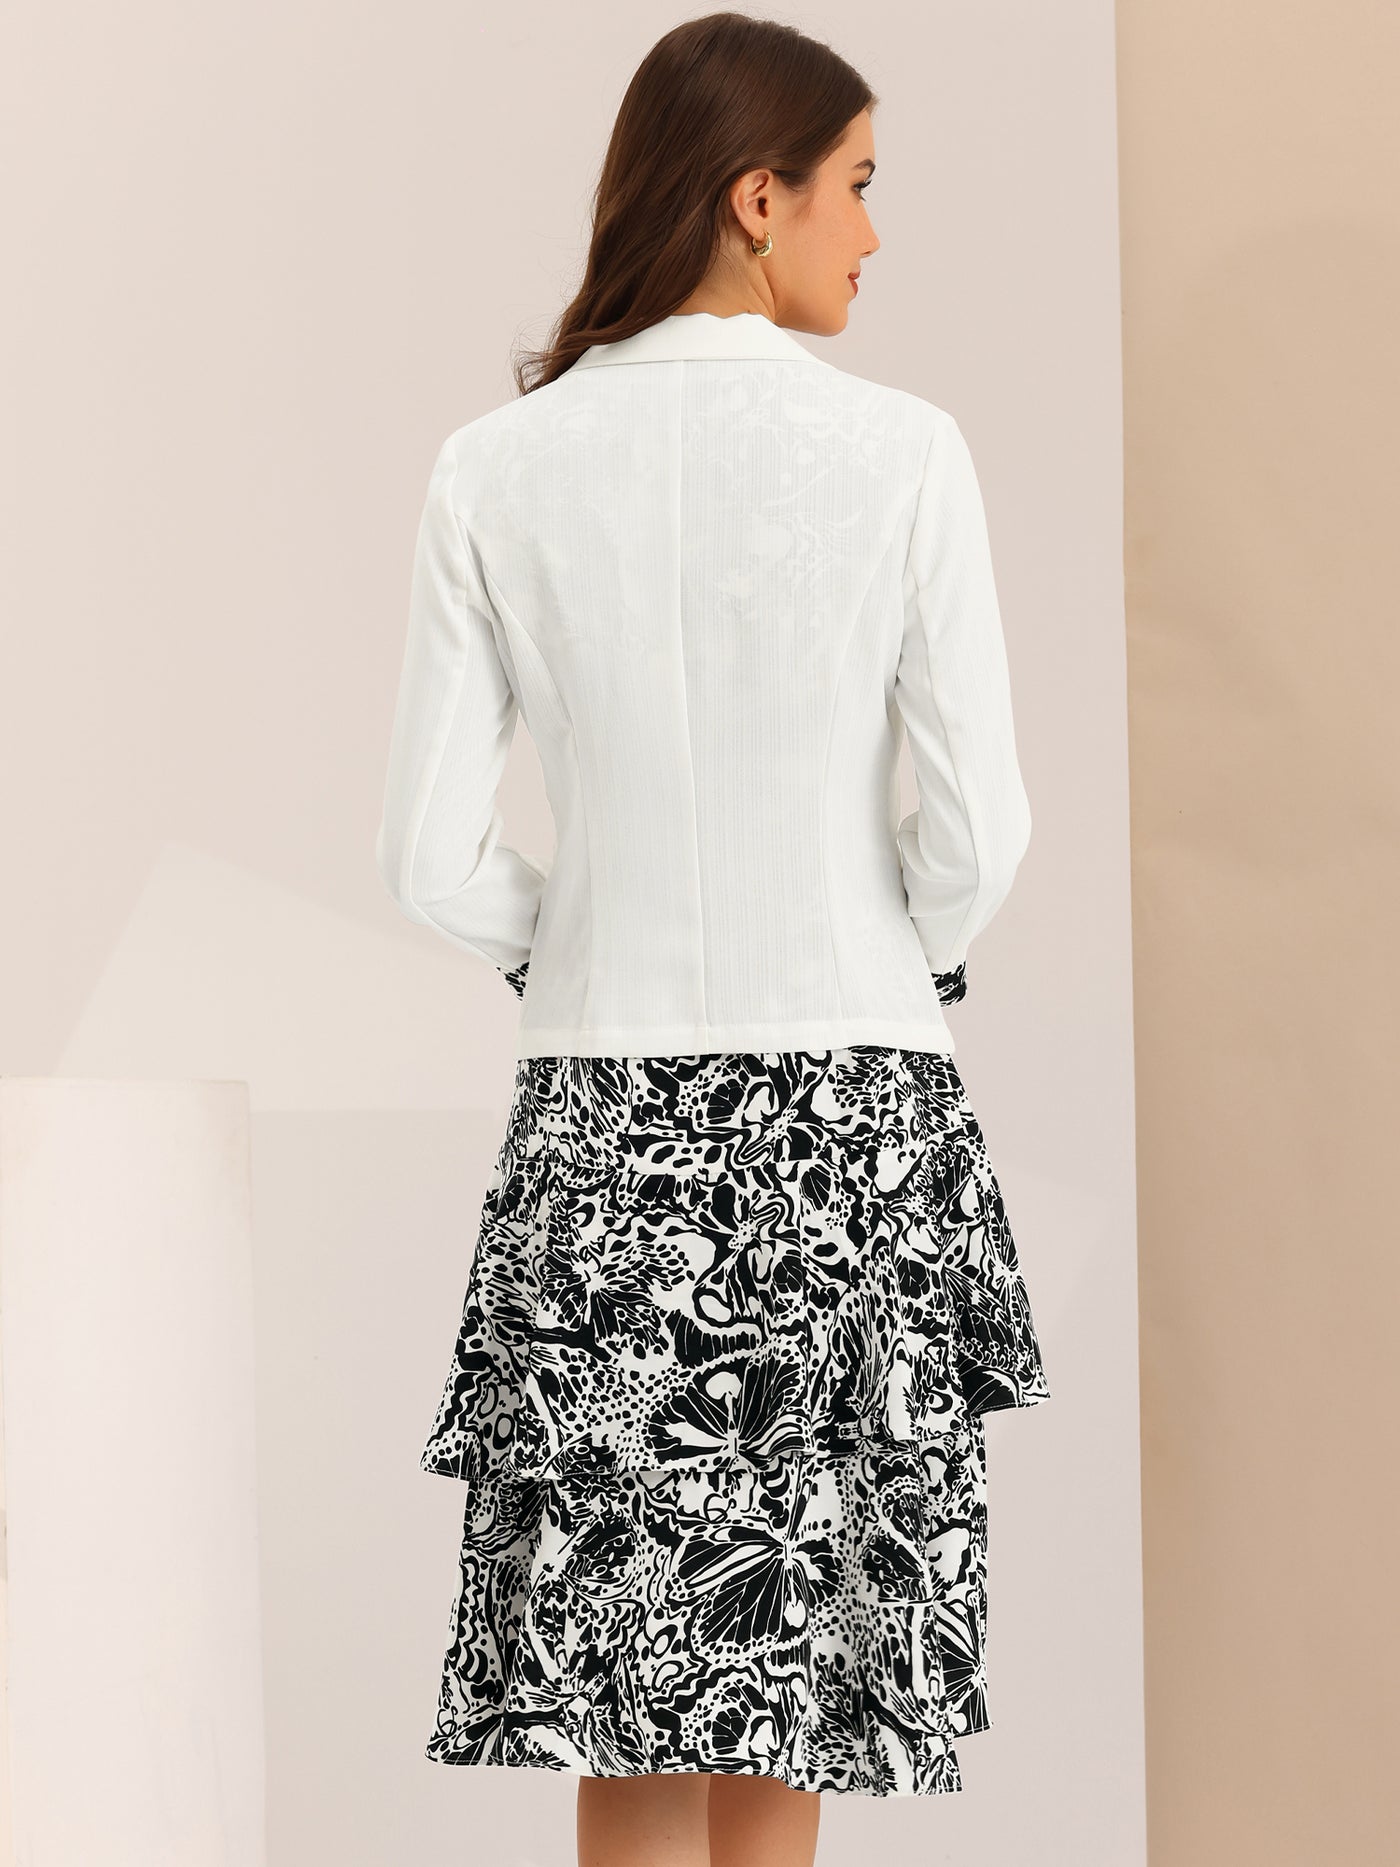 Allegra K Work Bow Print Contrast Panel 2pc Sets Chiffon V Neck Jacket Dress